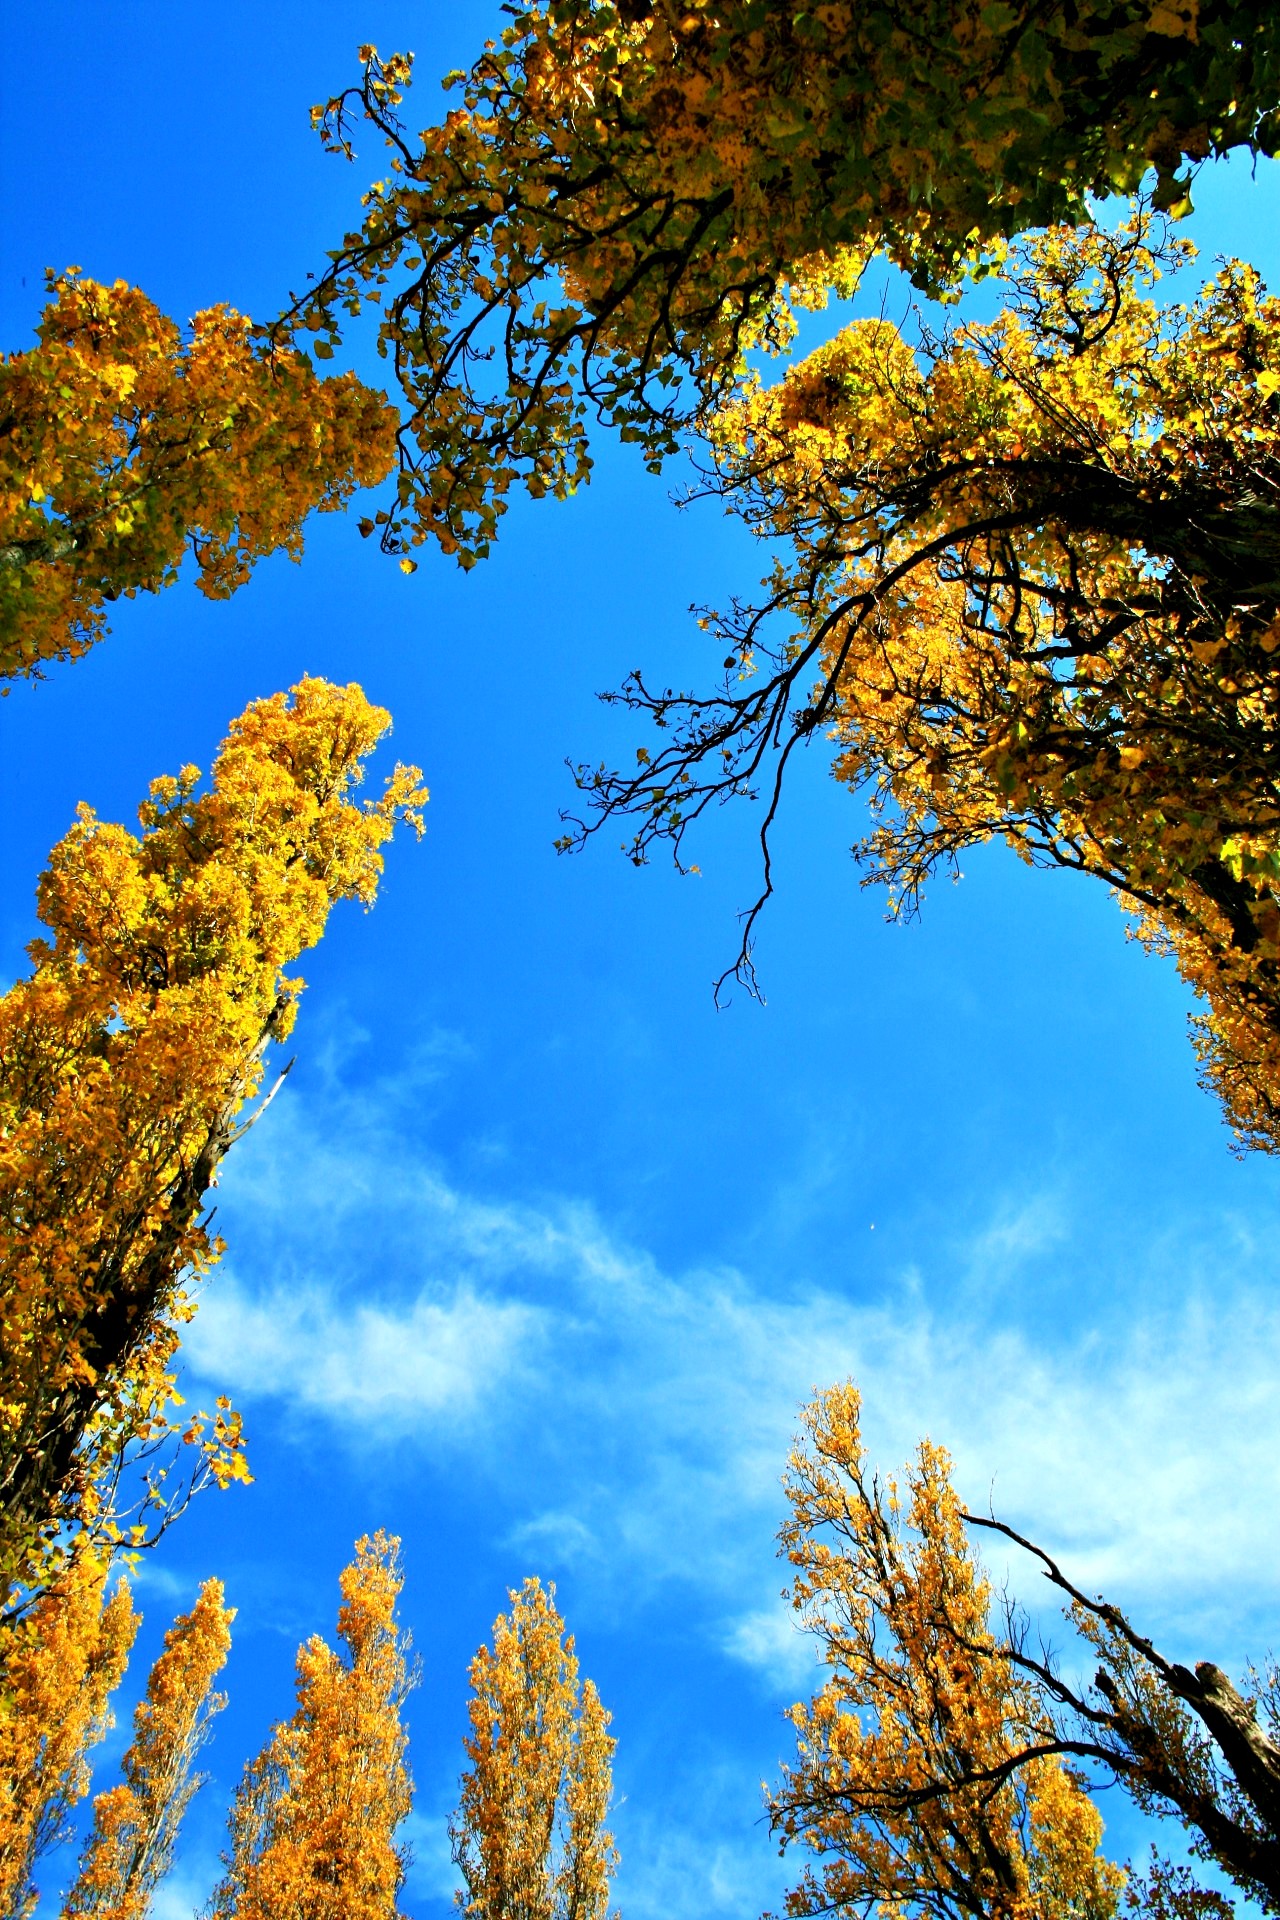 Golden poplars at the Blue Ridge Mountains